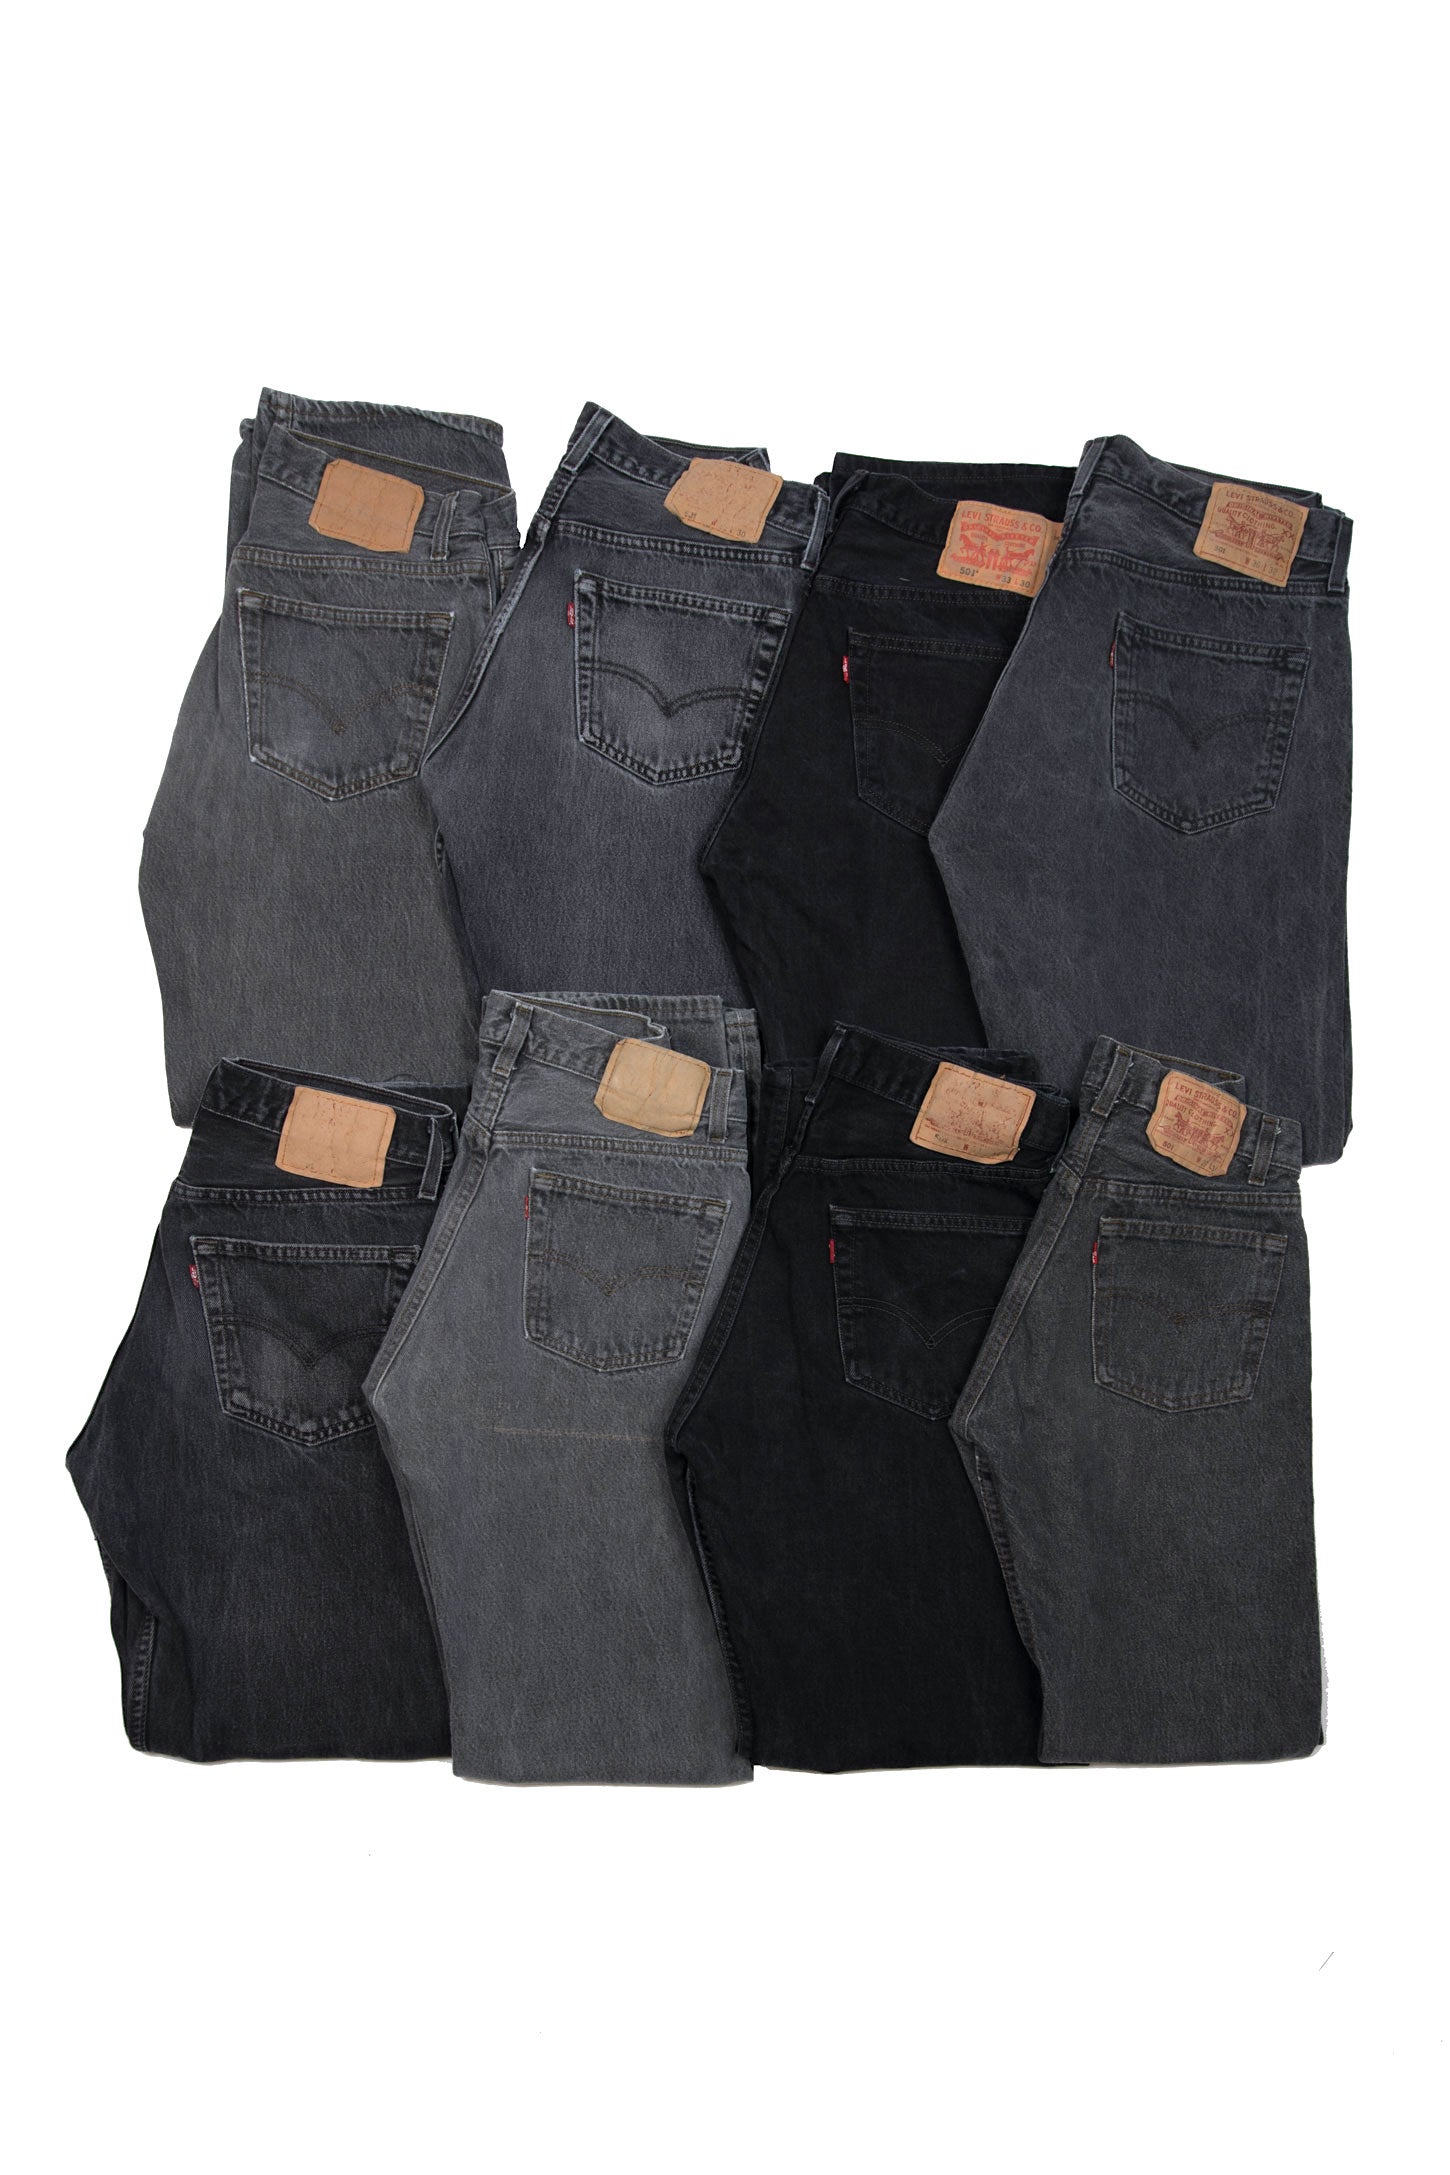 Levi's 501 Original fit jeans in brown